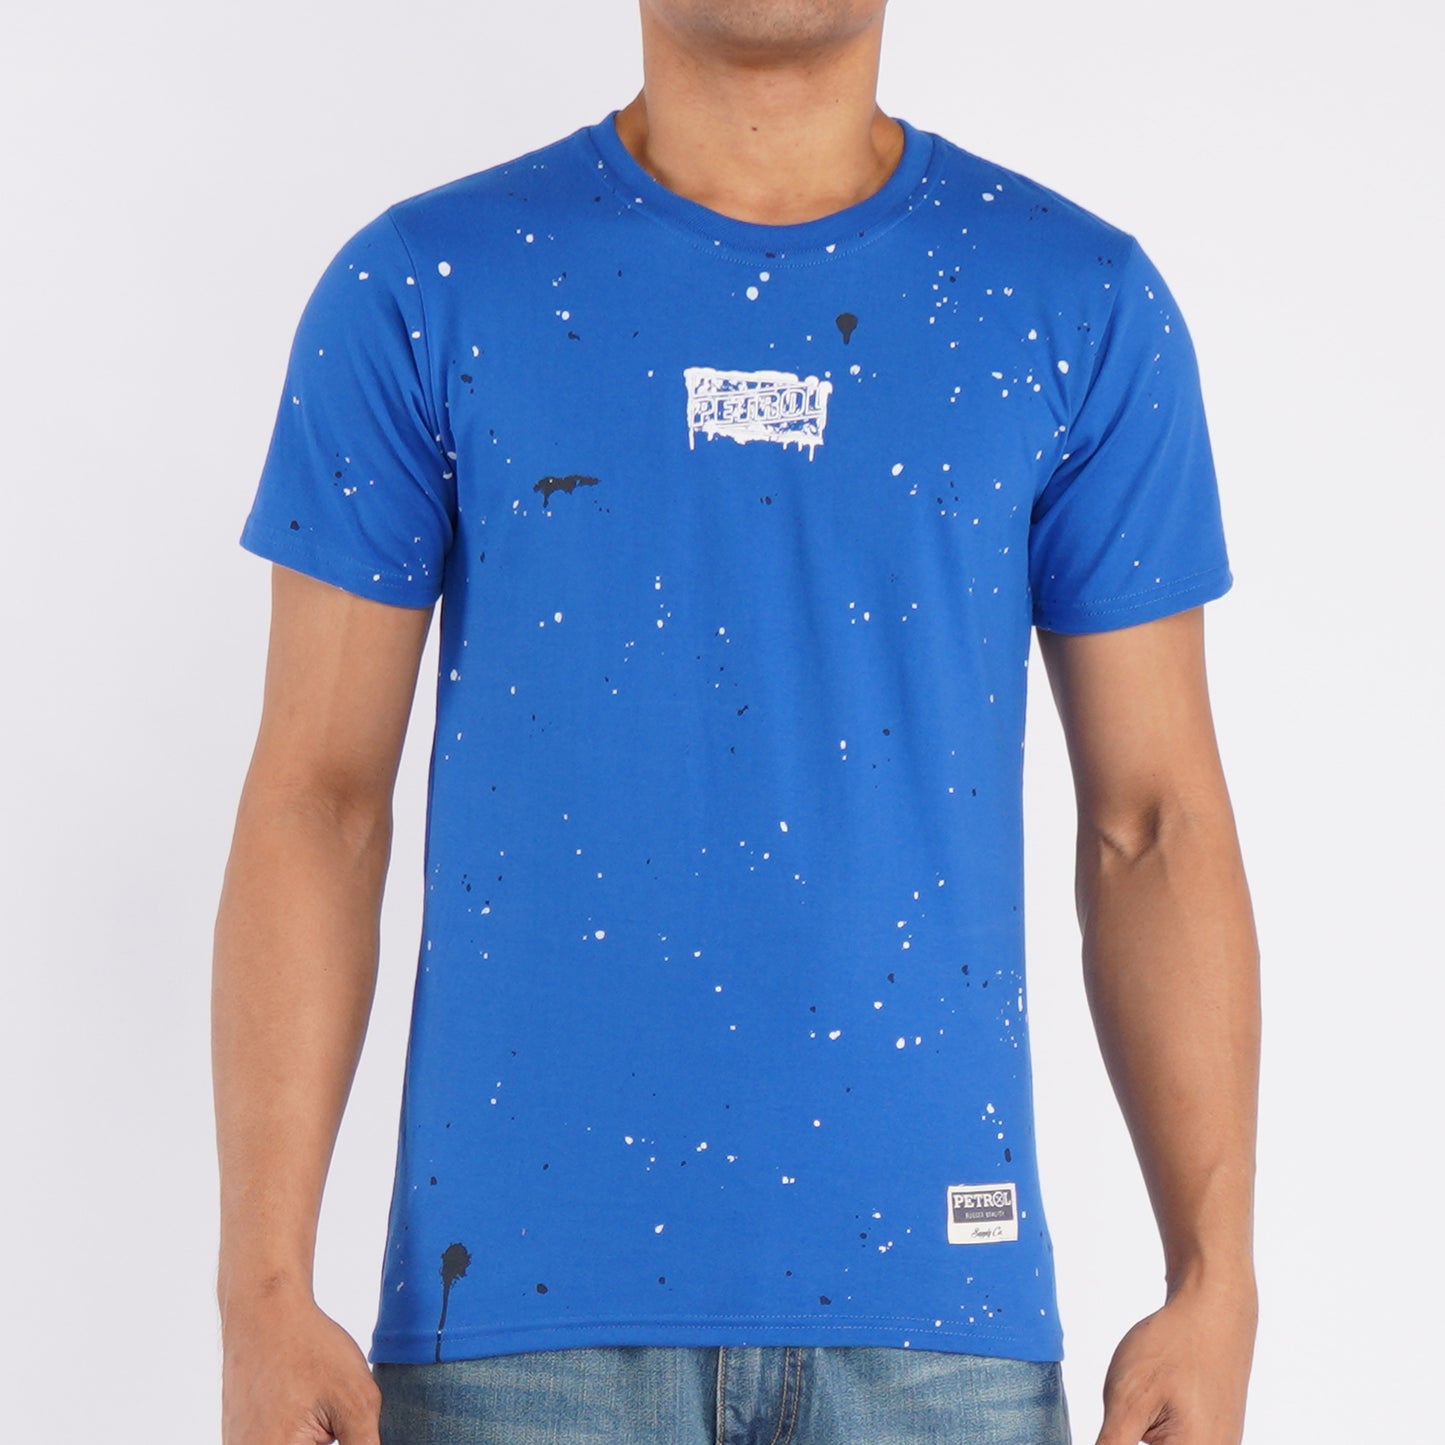 Petrol Basic Tees for Men Slim Fitting Shirt CVC Jersey Fabric Trendy fashion Casual Top True Blue T-shirt for Men 114808-U (True Blue)